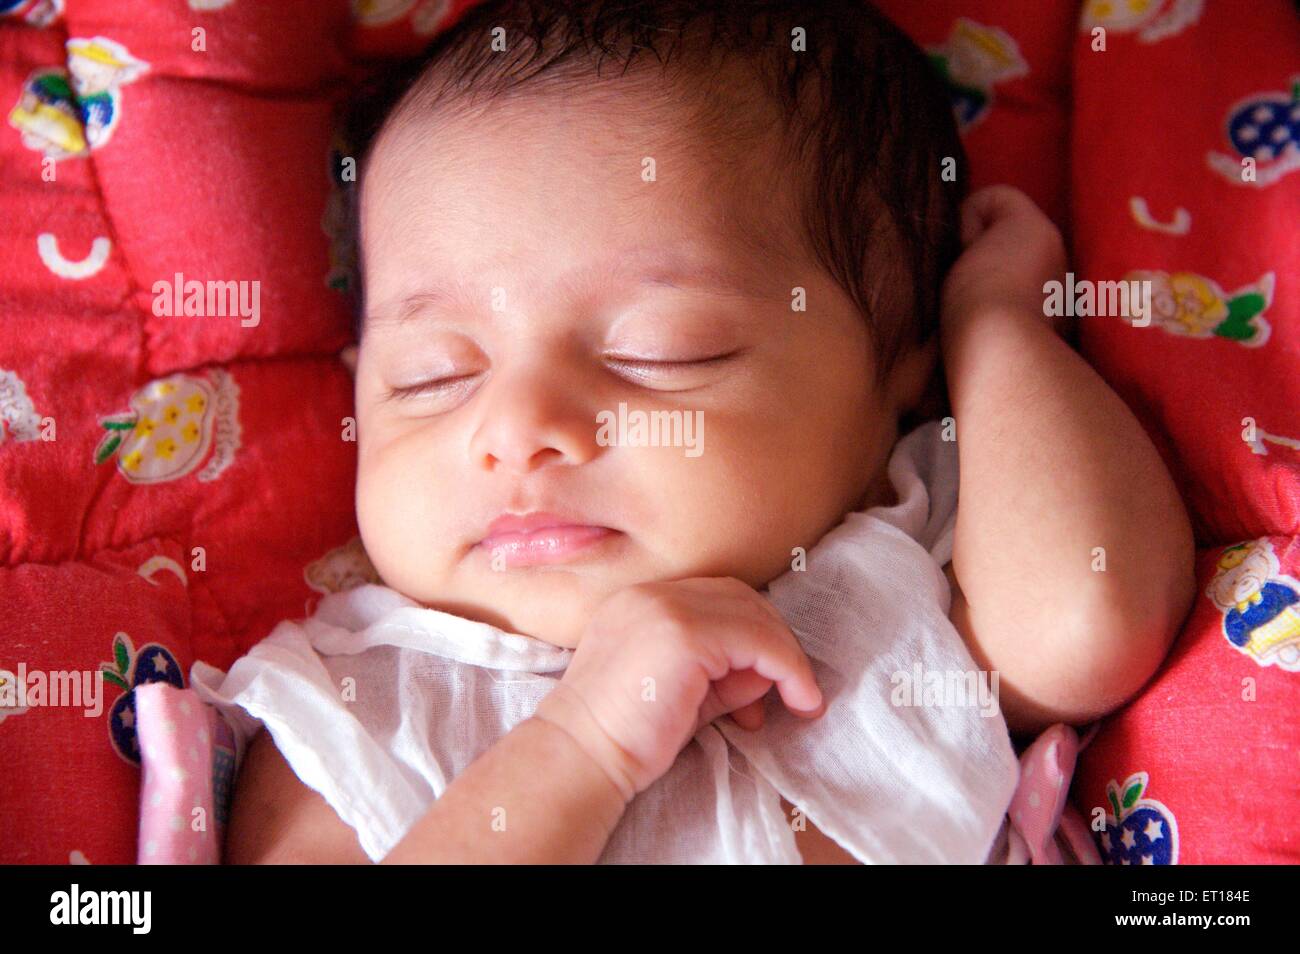 Indian baby girl child sleeping red background - MR#736LA - rmm 179684 Stock Photo